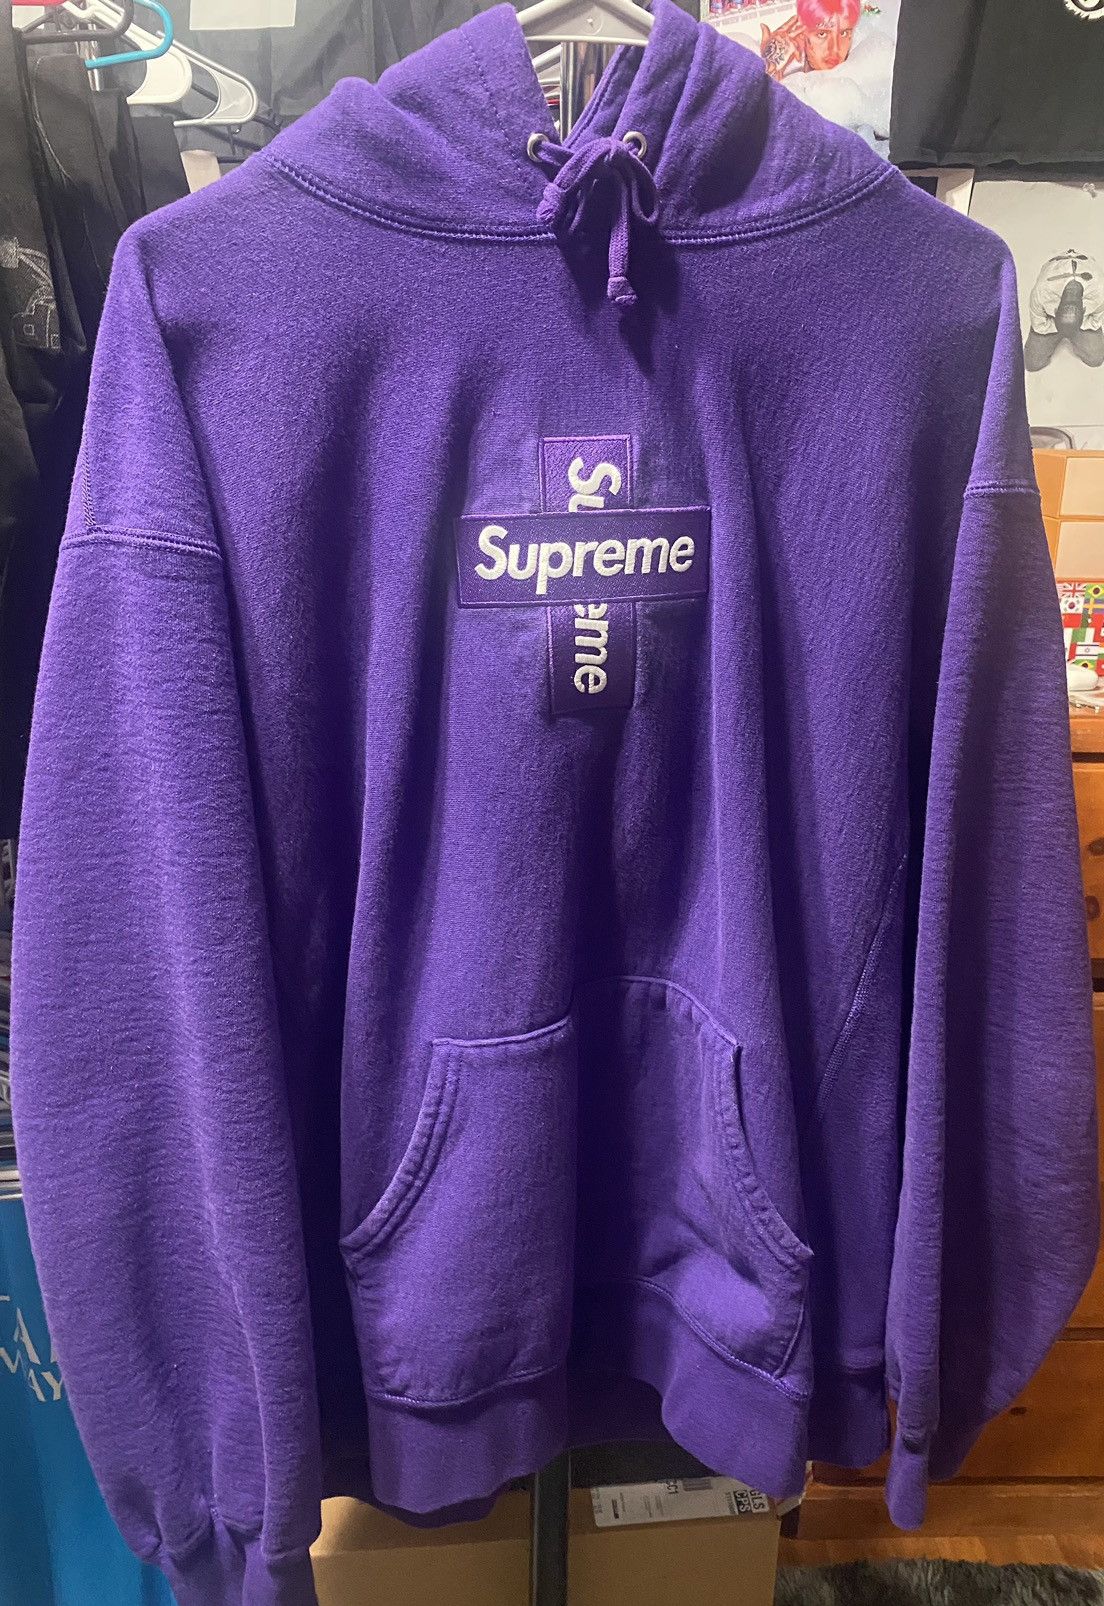 Supreme Supreme cross box logo hoodie | Grailed